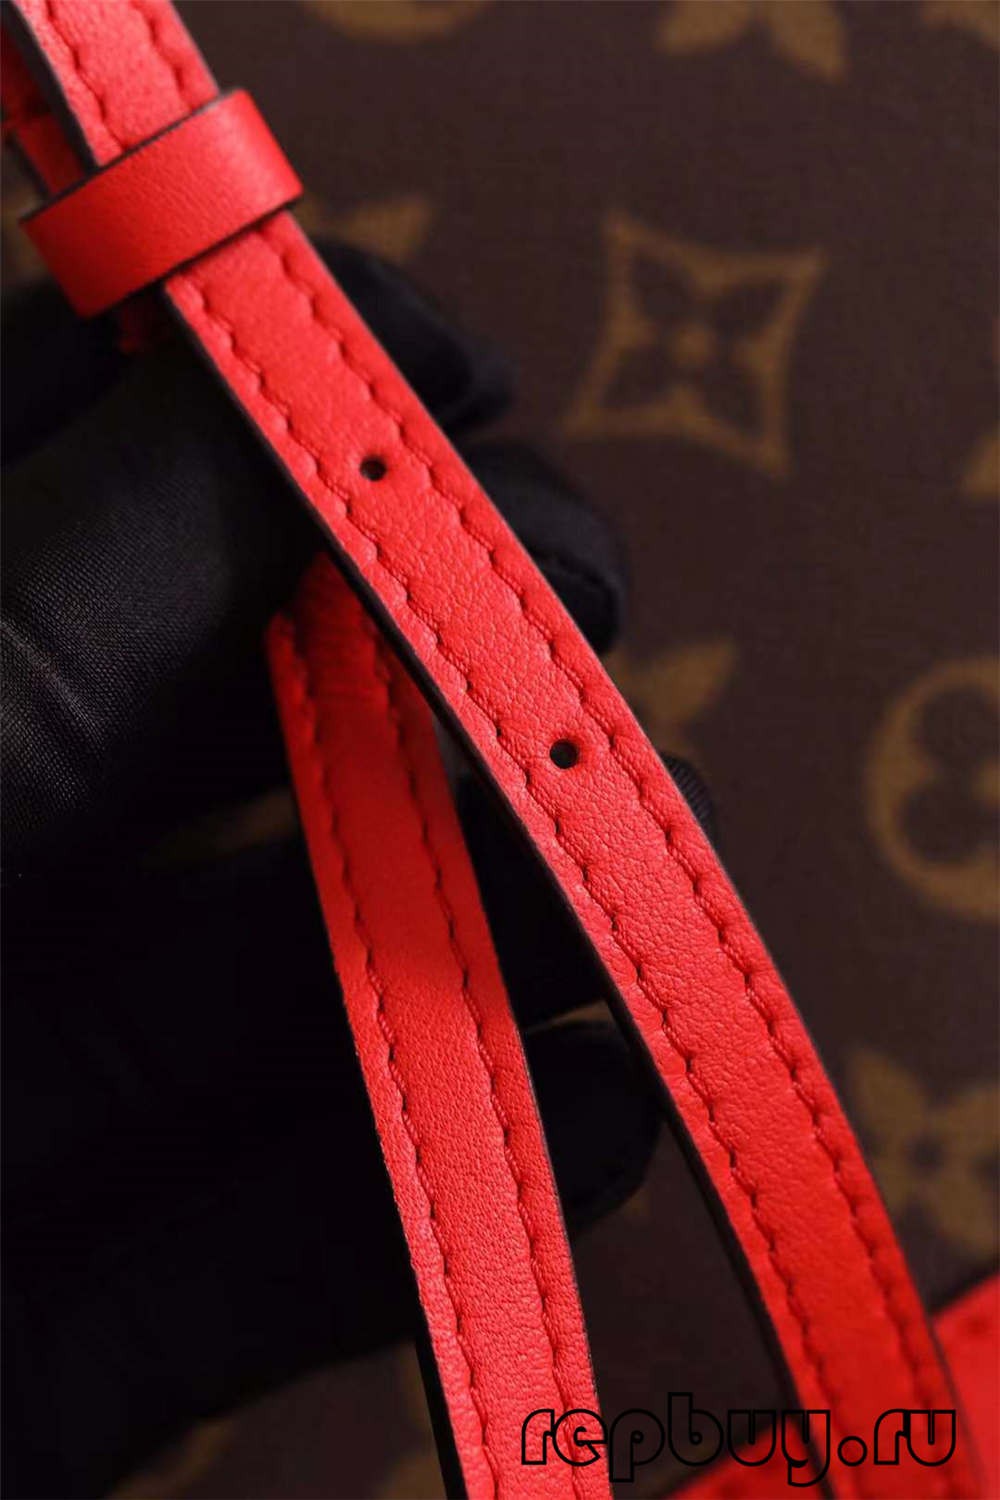 Louis Vuitton M44322 20cm Lock BB Red Top Replica Bags (2022 Latest)-Լավագույն որակի կեղծ Louis Vuitton պայուսակների առցանց խանութ, Replica դիզայներական պայուսակ ru